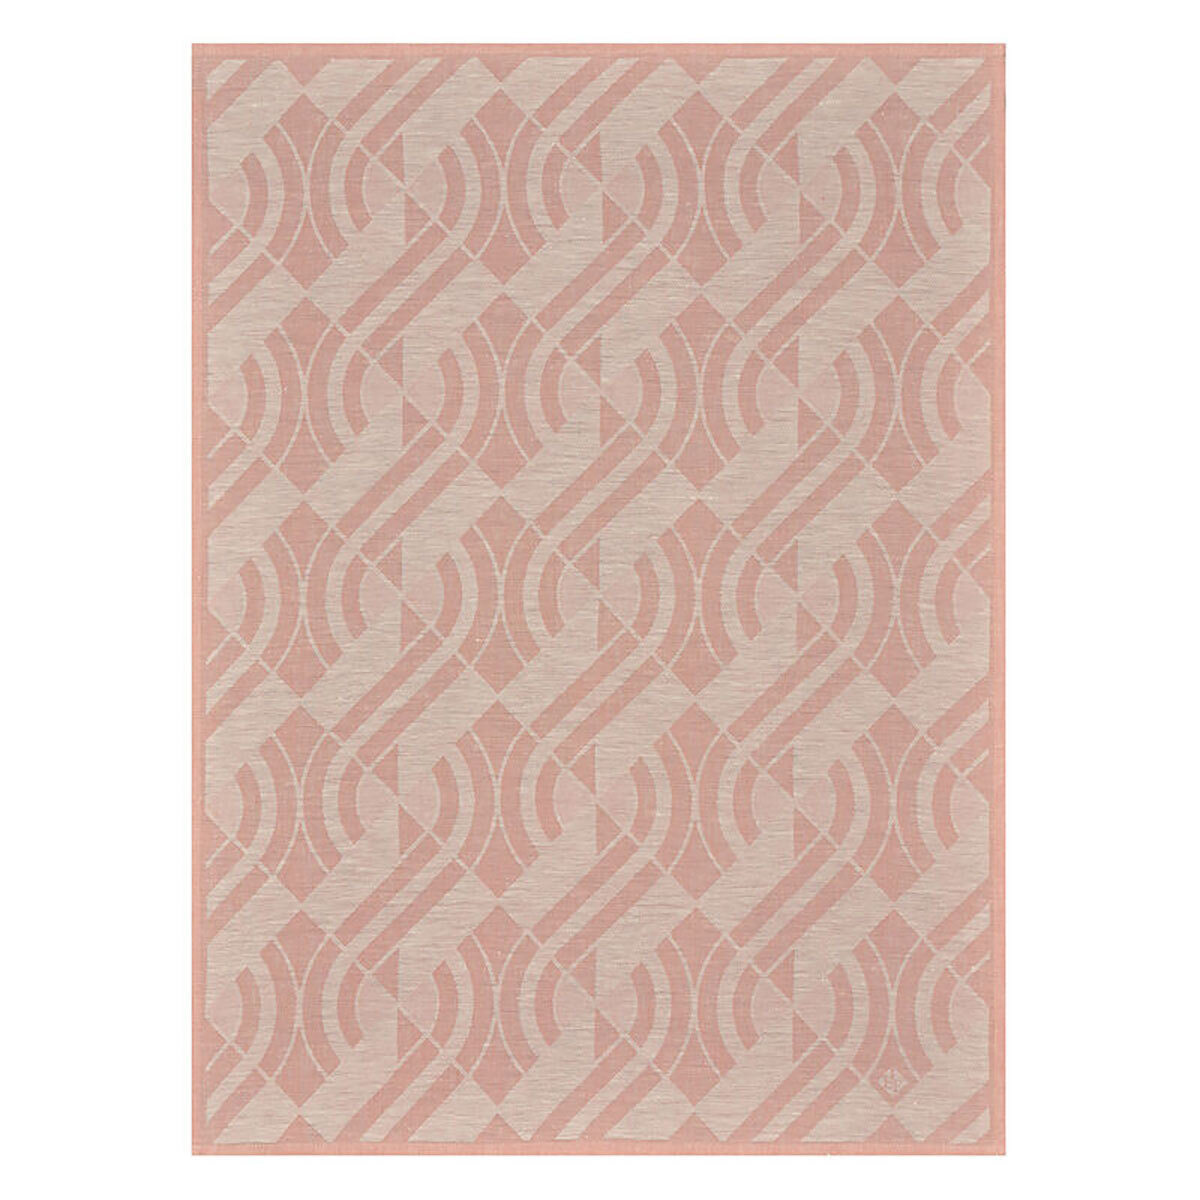 Le Jacquard Francais Crystal Towel Neo Pink 100% Linen 24 x 31 Inch 27524